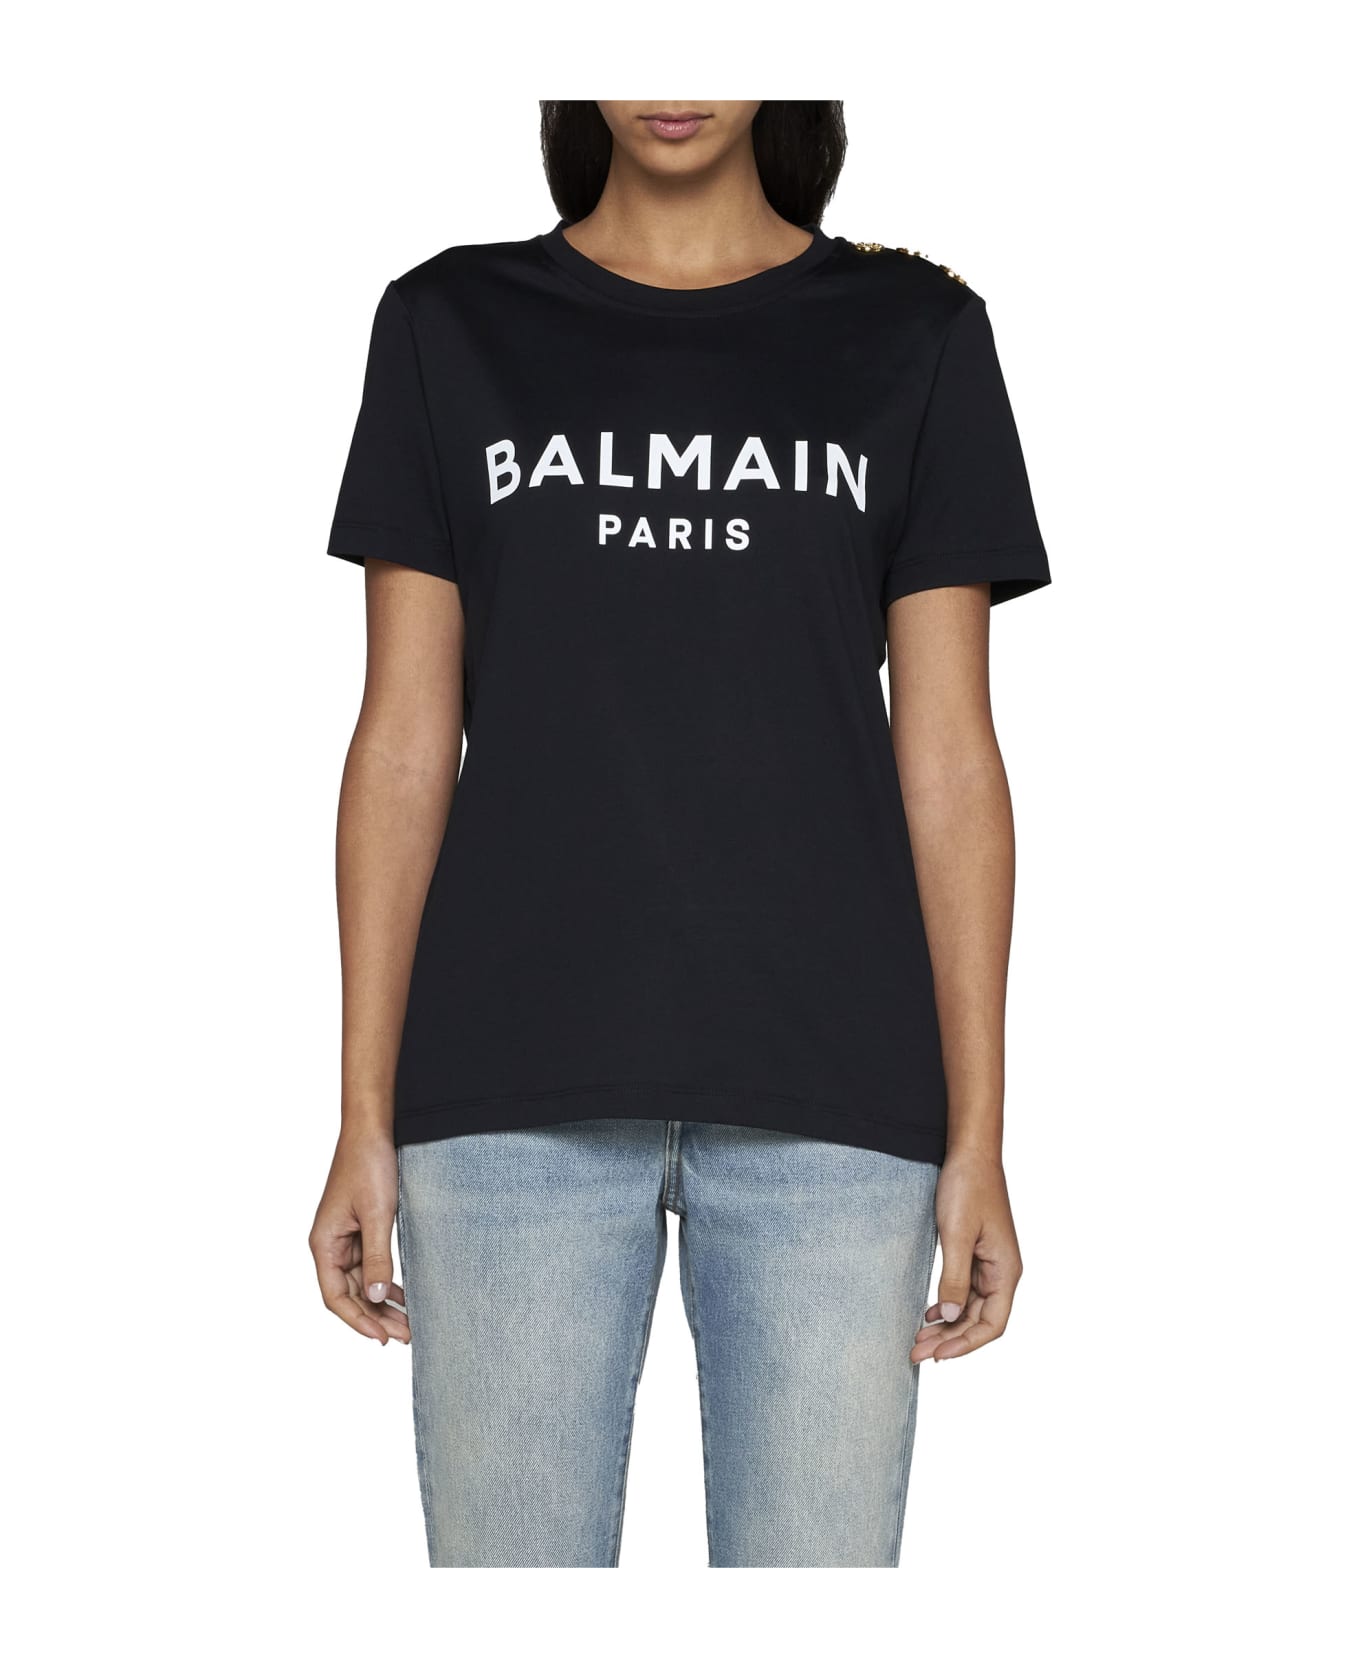 Balmain T-Shirt - Noir/blanc